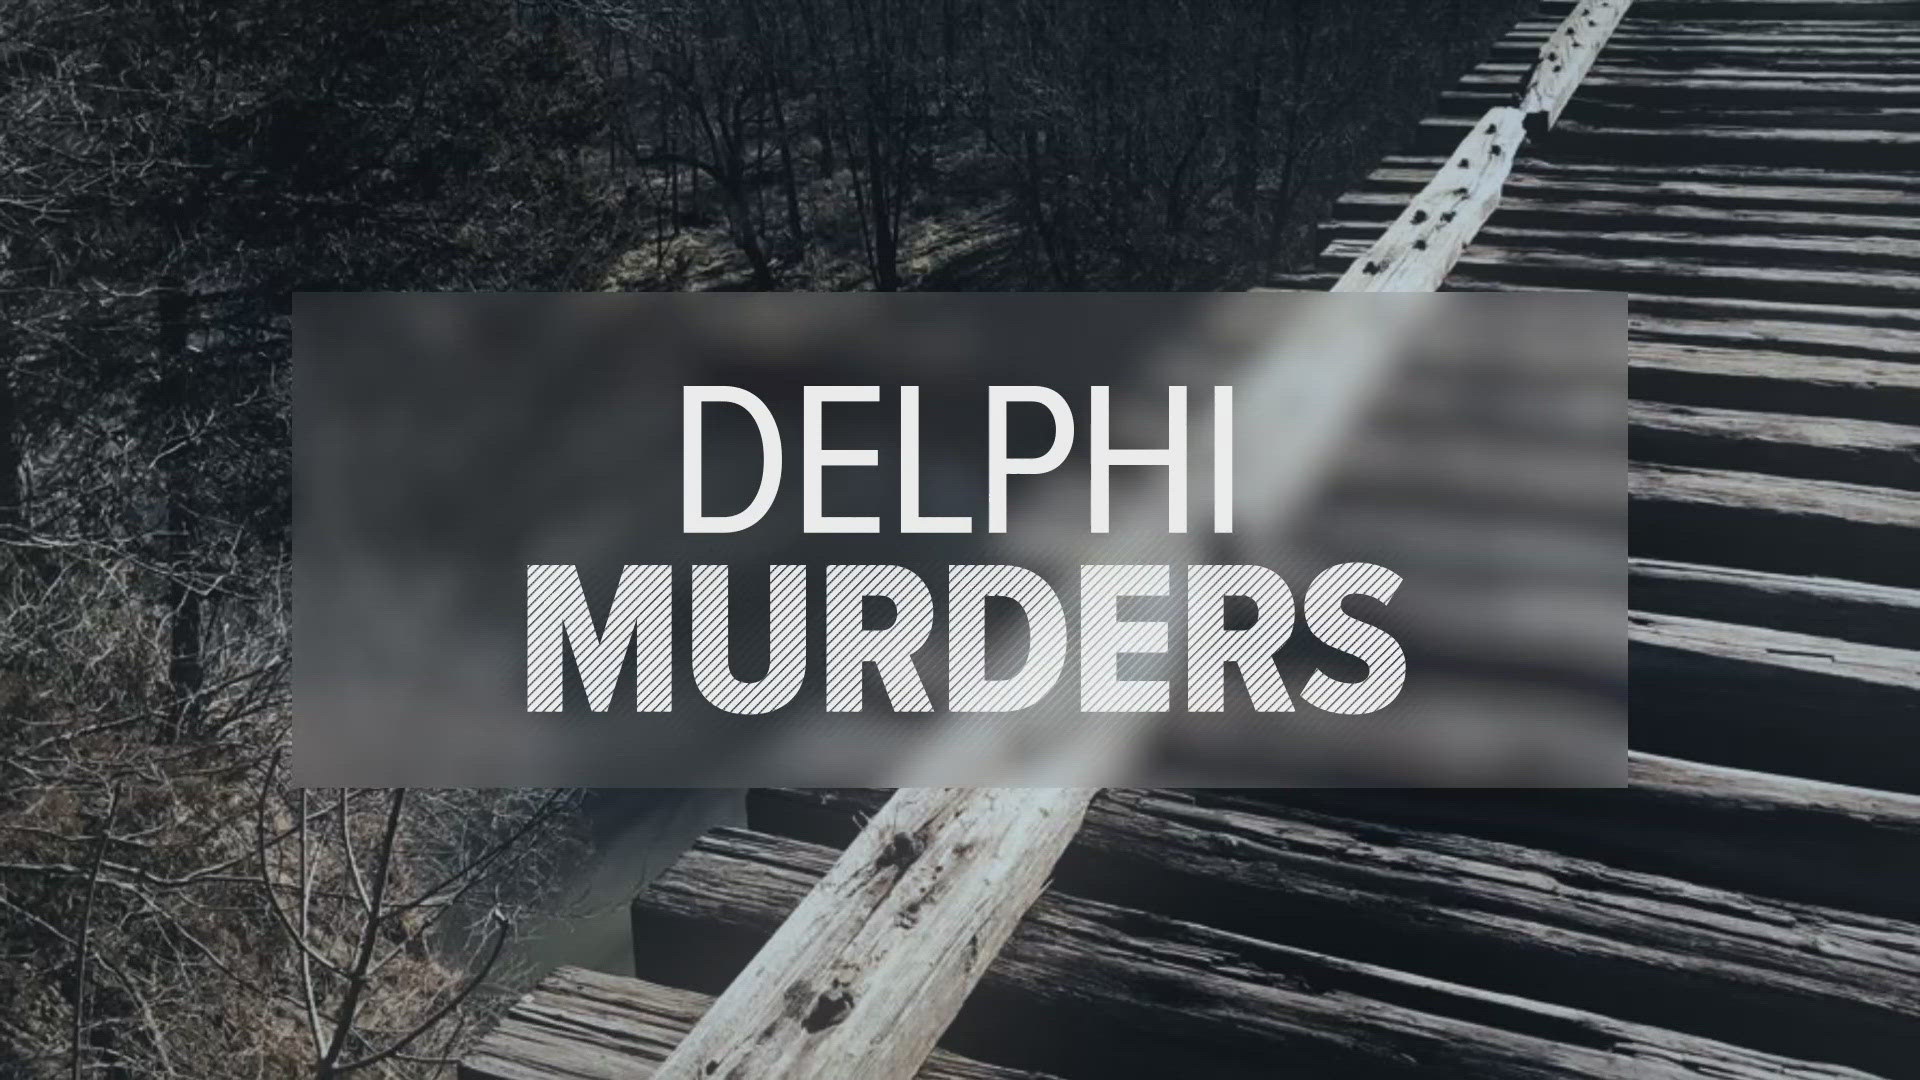 13News reporter Karen Campbell breaks down the latest developments in the Delphi murders case.